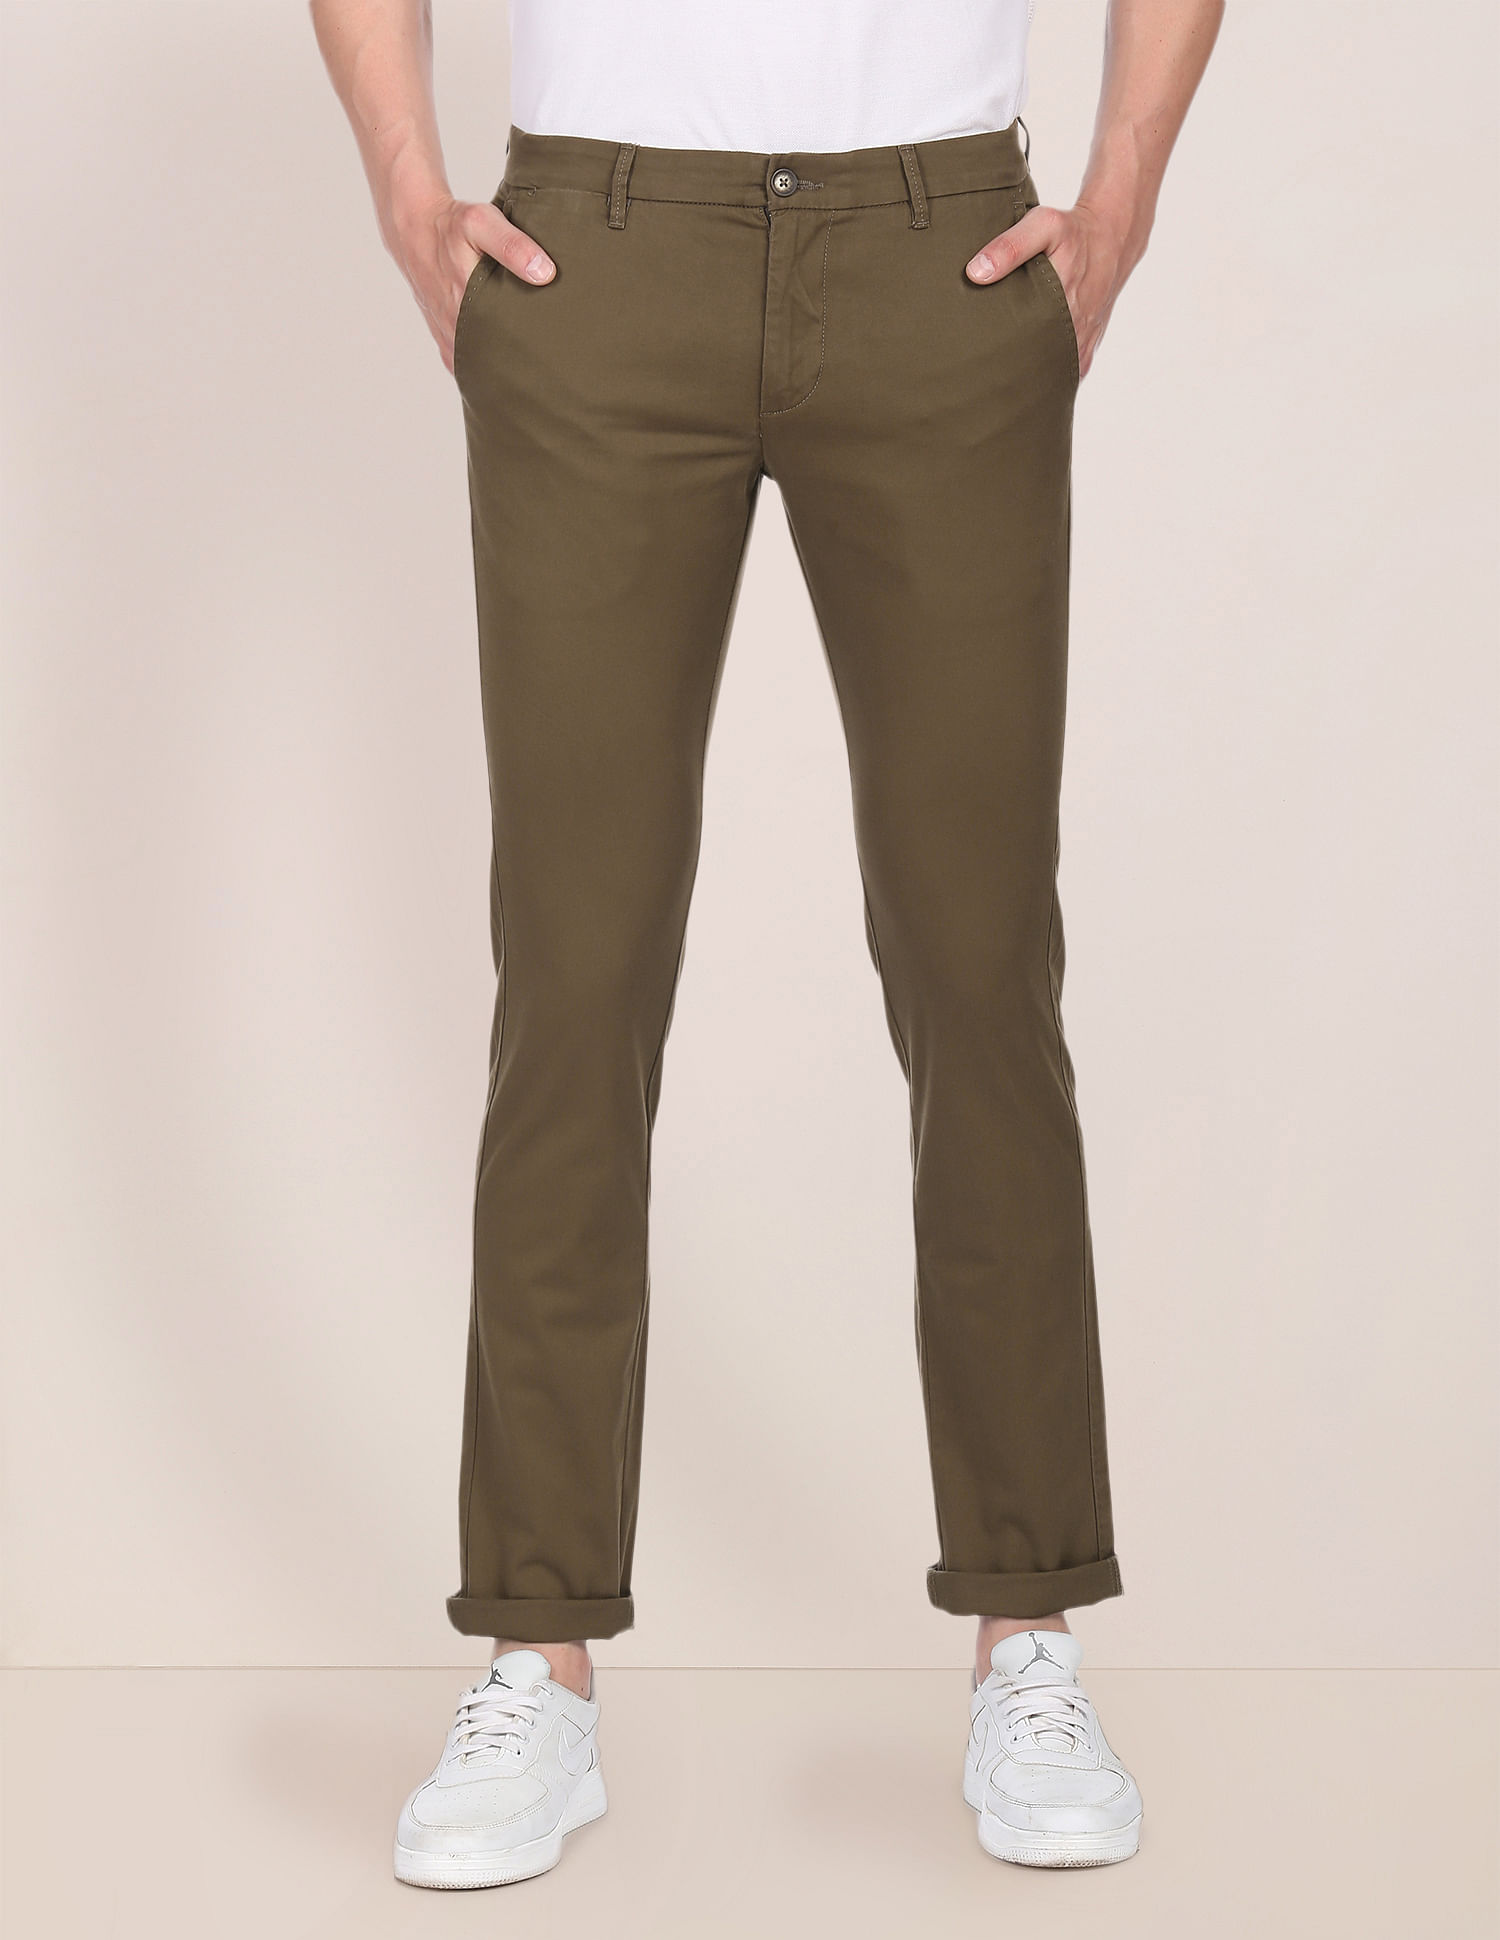 Firm Price! U.S.Polo Assn Khaki Pants Size 4 Boys, in Excellent condition |  Khaki, Clothes design, Fashion